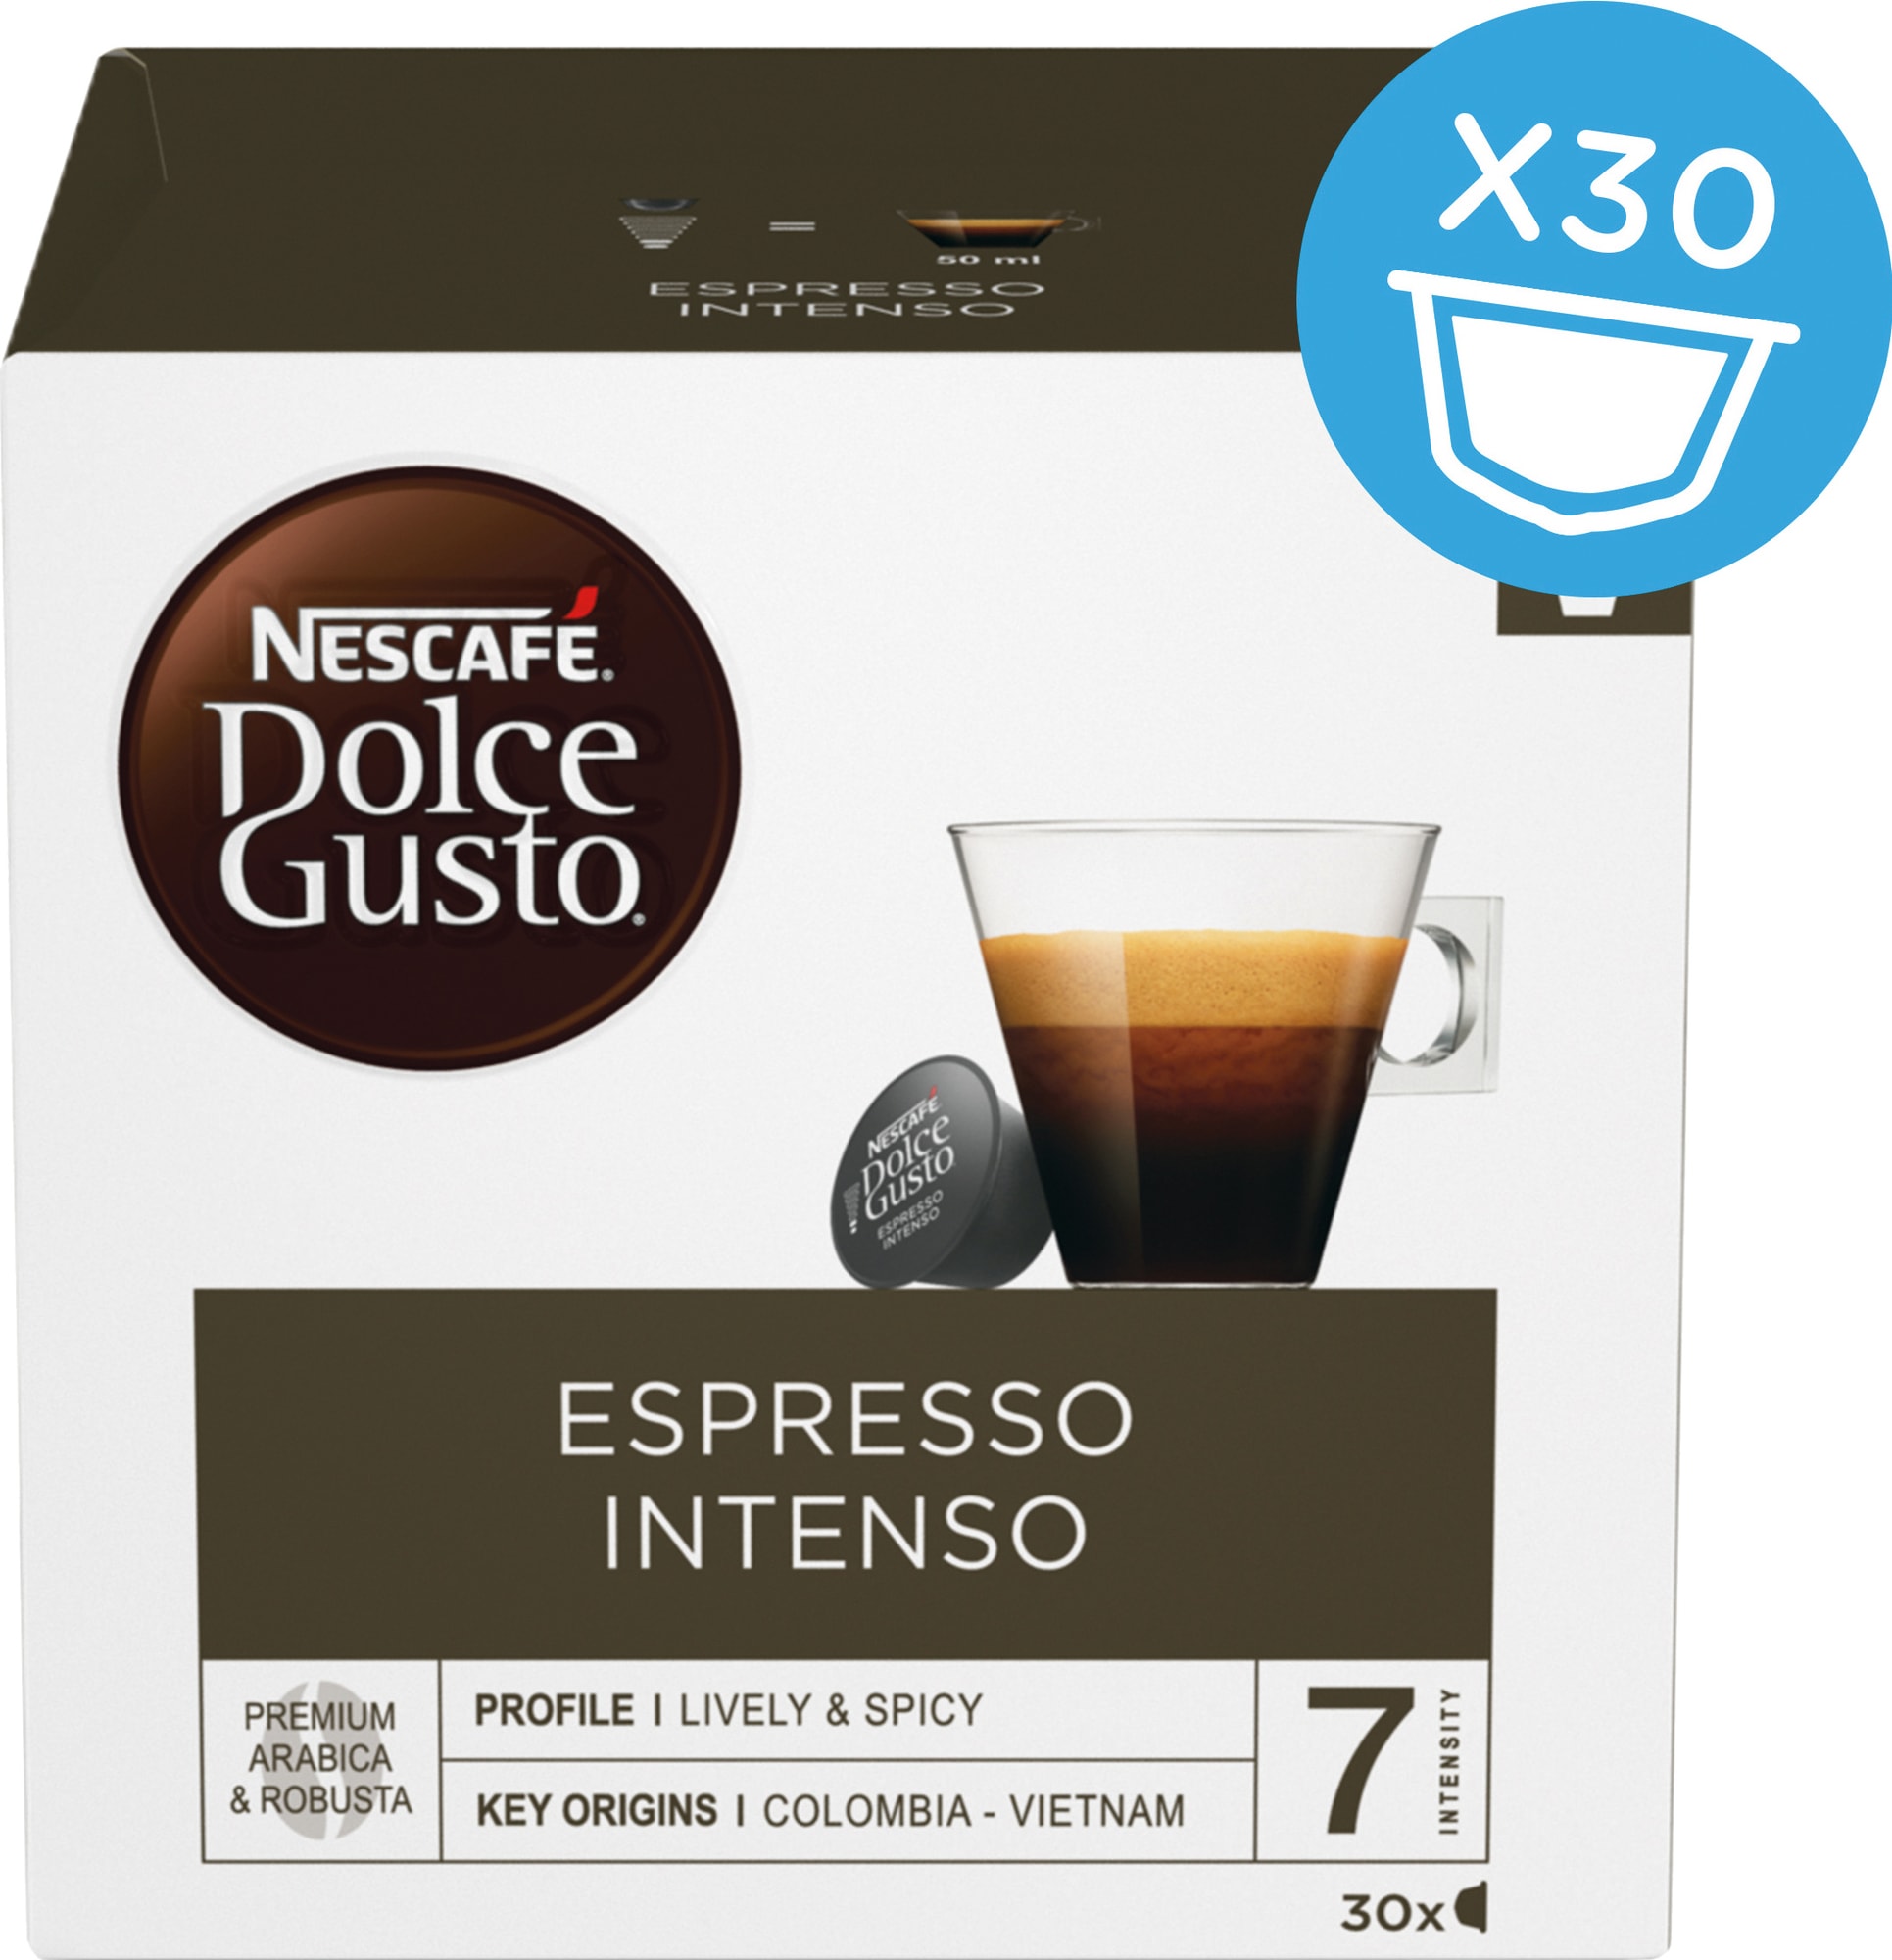 NescafÃ¨ Dolce Gusto kapsler - Espresso Intenso thumbnail